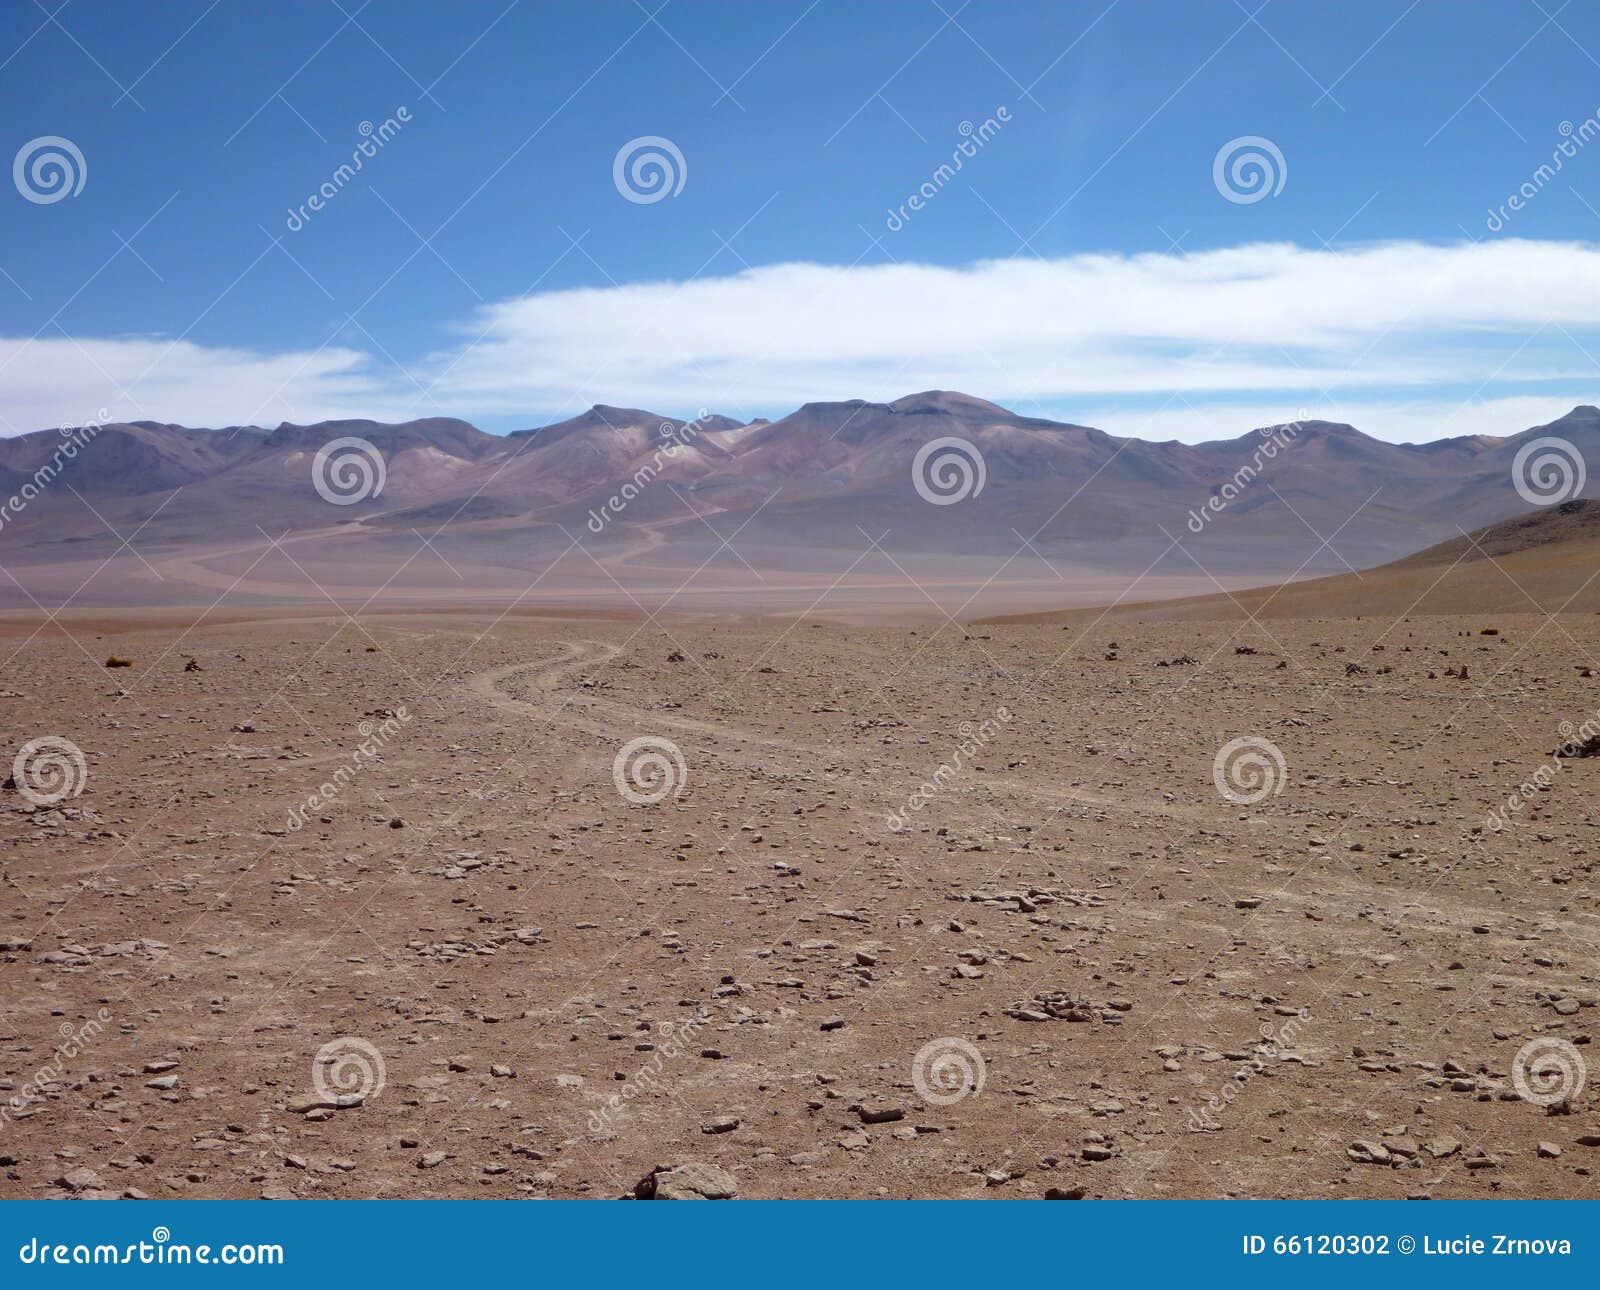 desierto colorado at bolivia altiplano desert